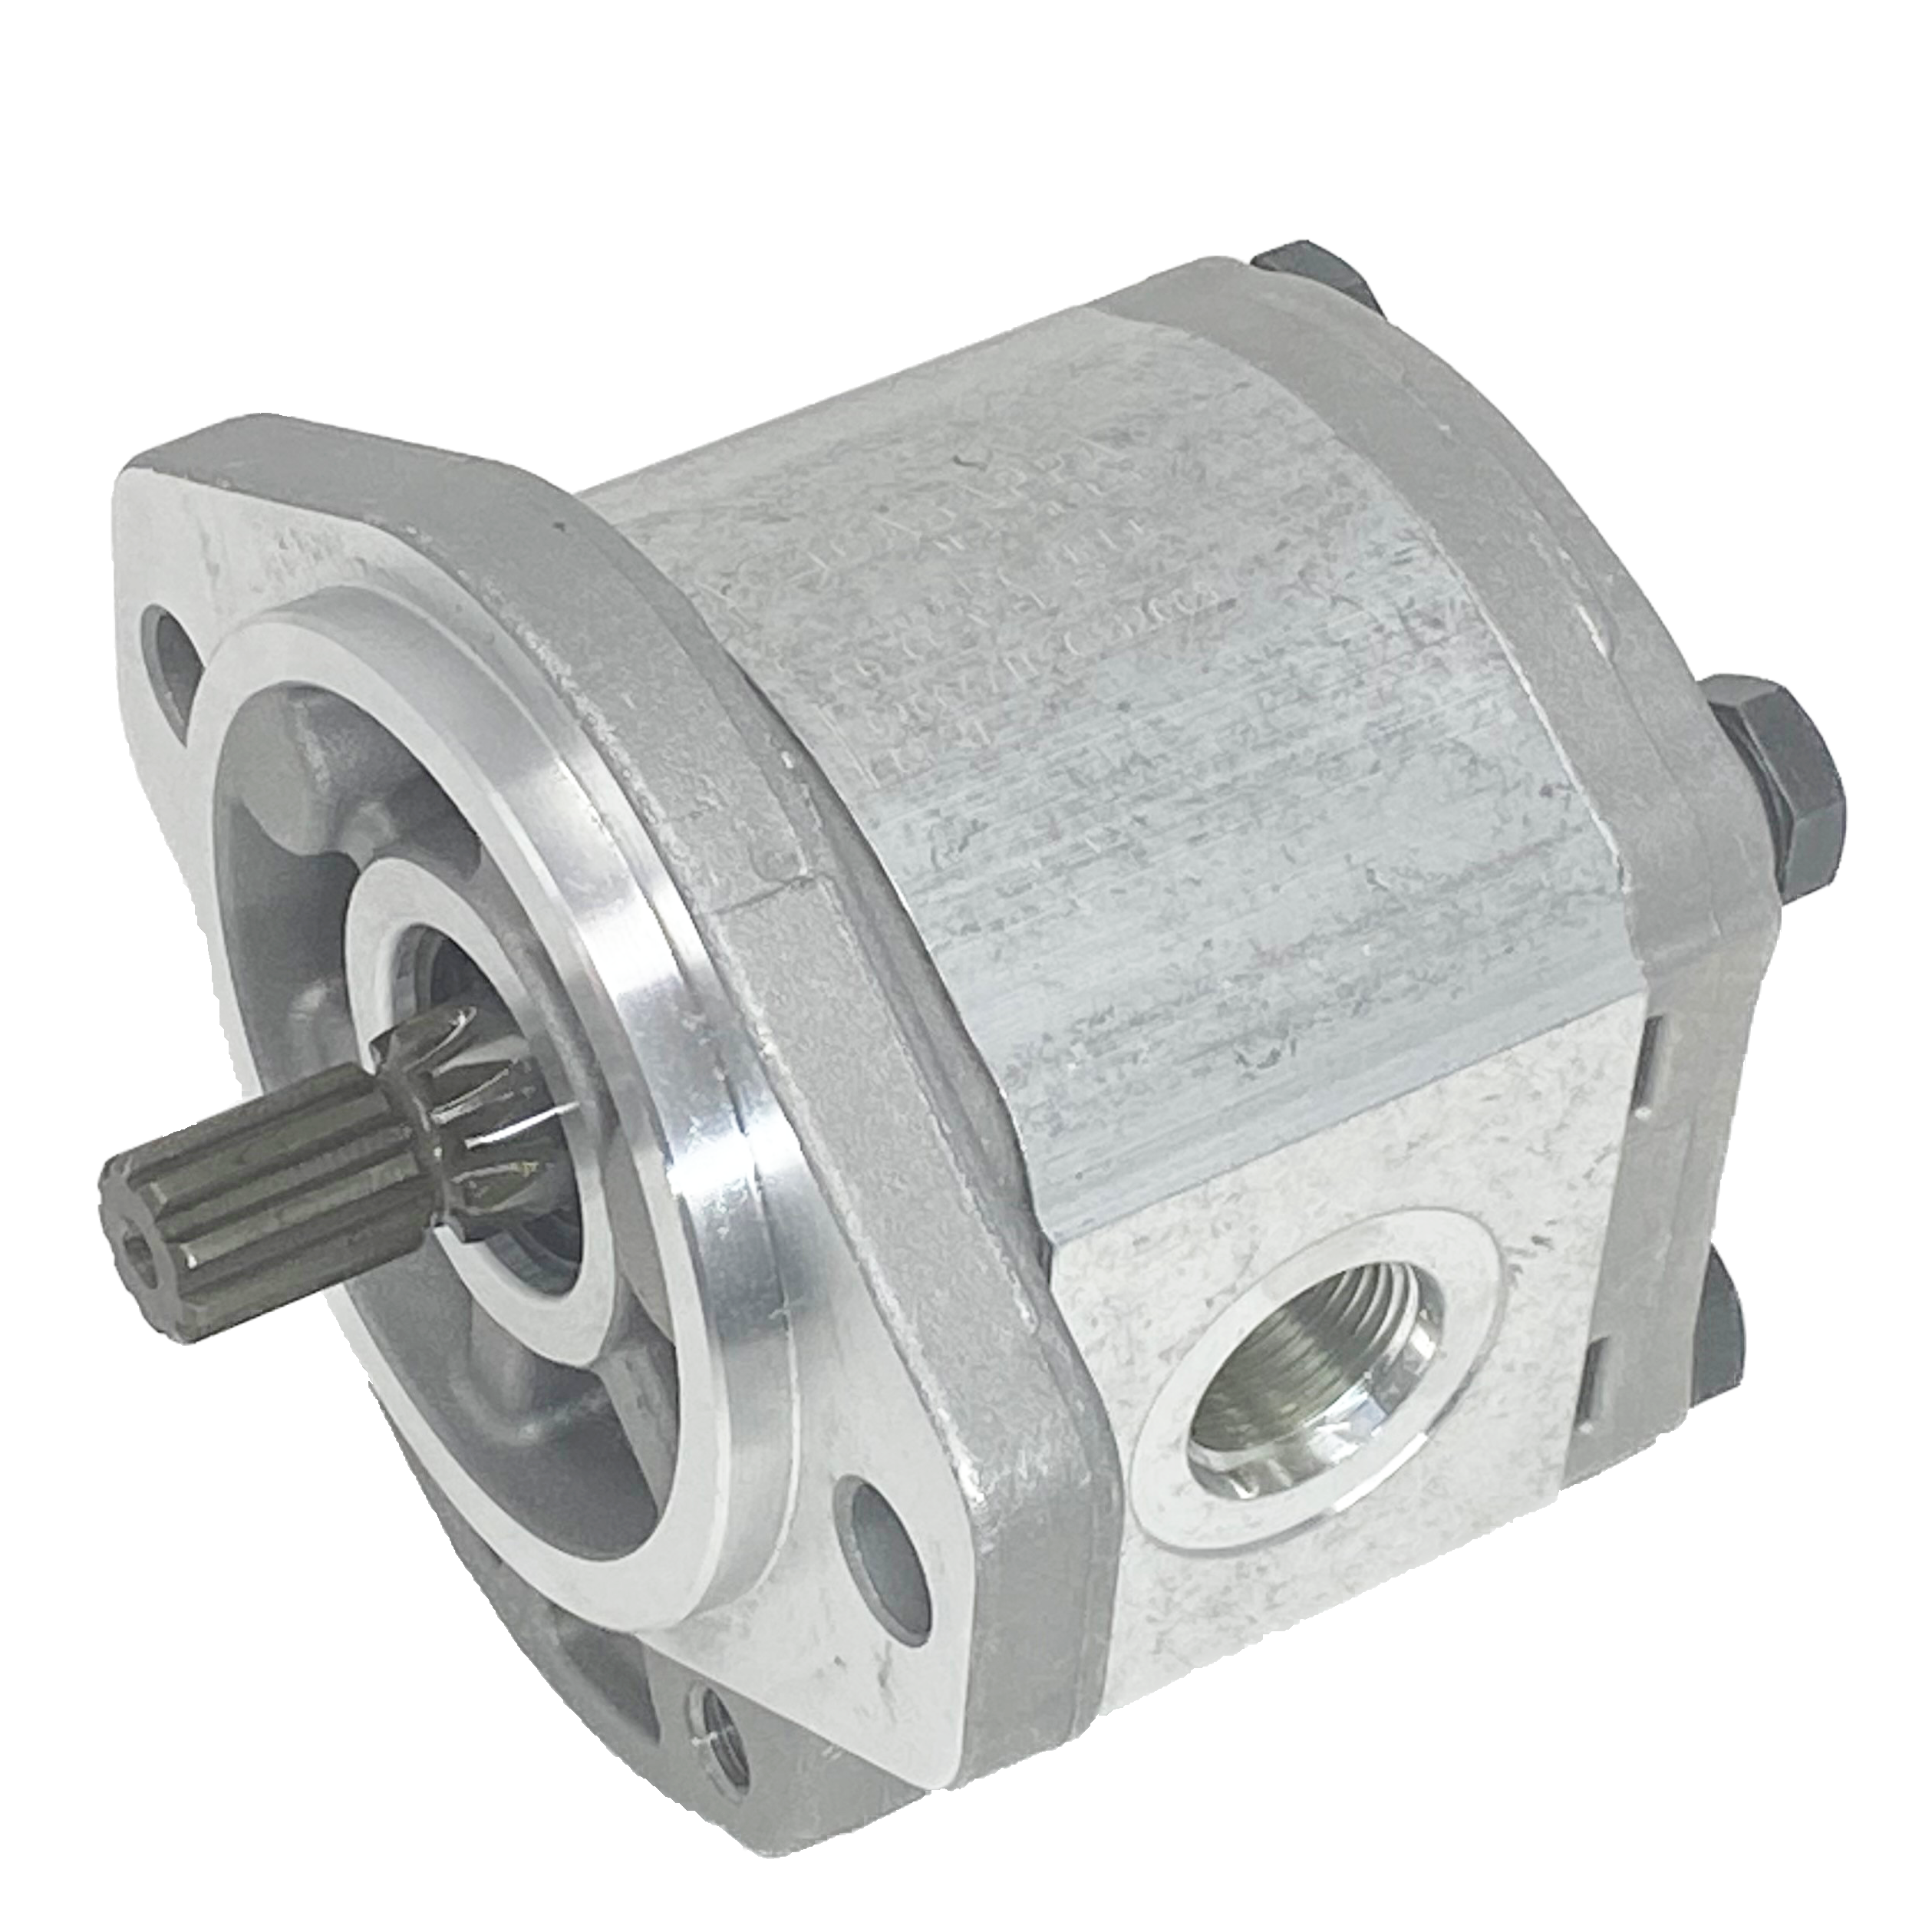 PLM20.6,3R0-03S1-LOC/OC-N-EL : Casappa Polaris Gear Motor, 6.61cc, 3625psi Rated, 4000RPM, Reversible Rear External Drain, 9T 16/32dp Shaft, SAE A 2-Bolt Flange, 0.625 (5/8") #10 SAE Inlet, 0.625 (5/8") #10 SAE Outlet, Aluminum Body & Flange